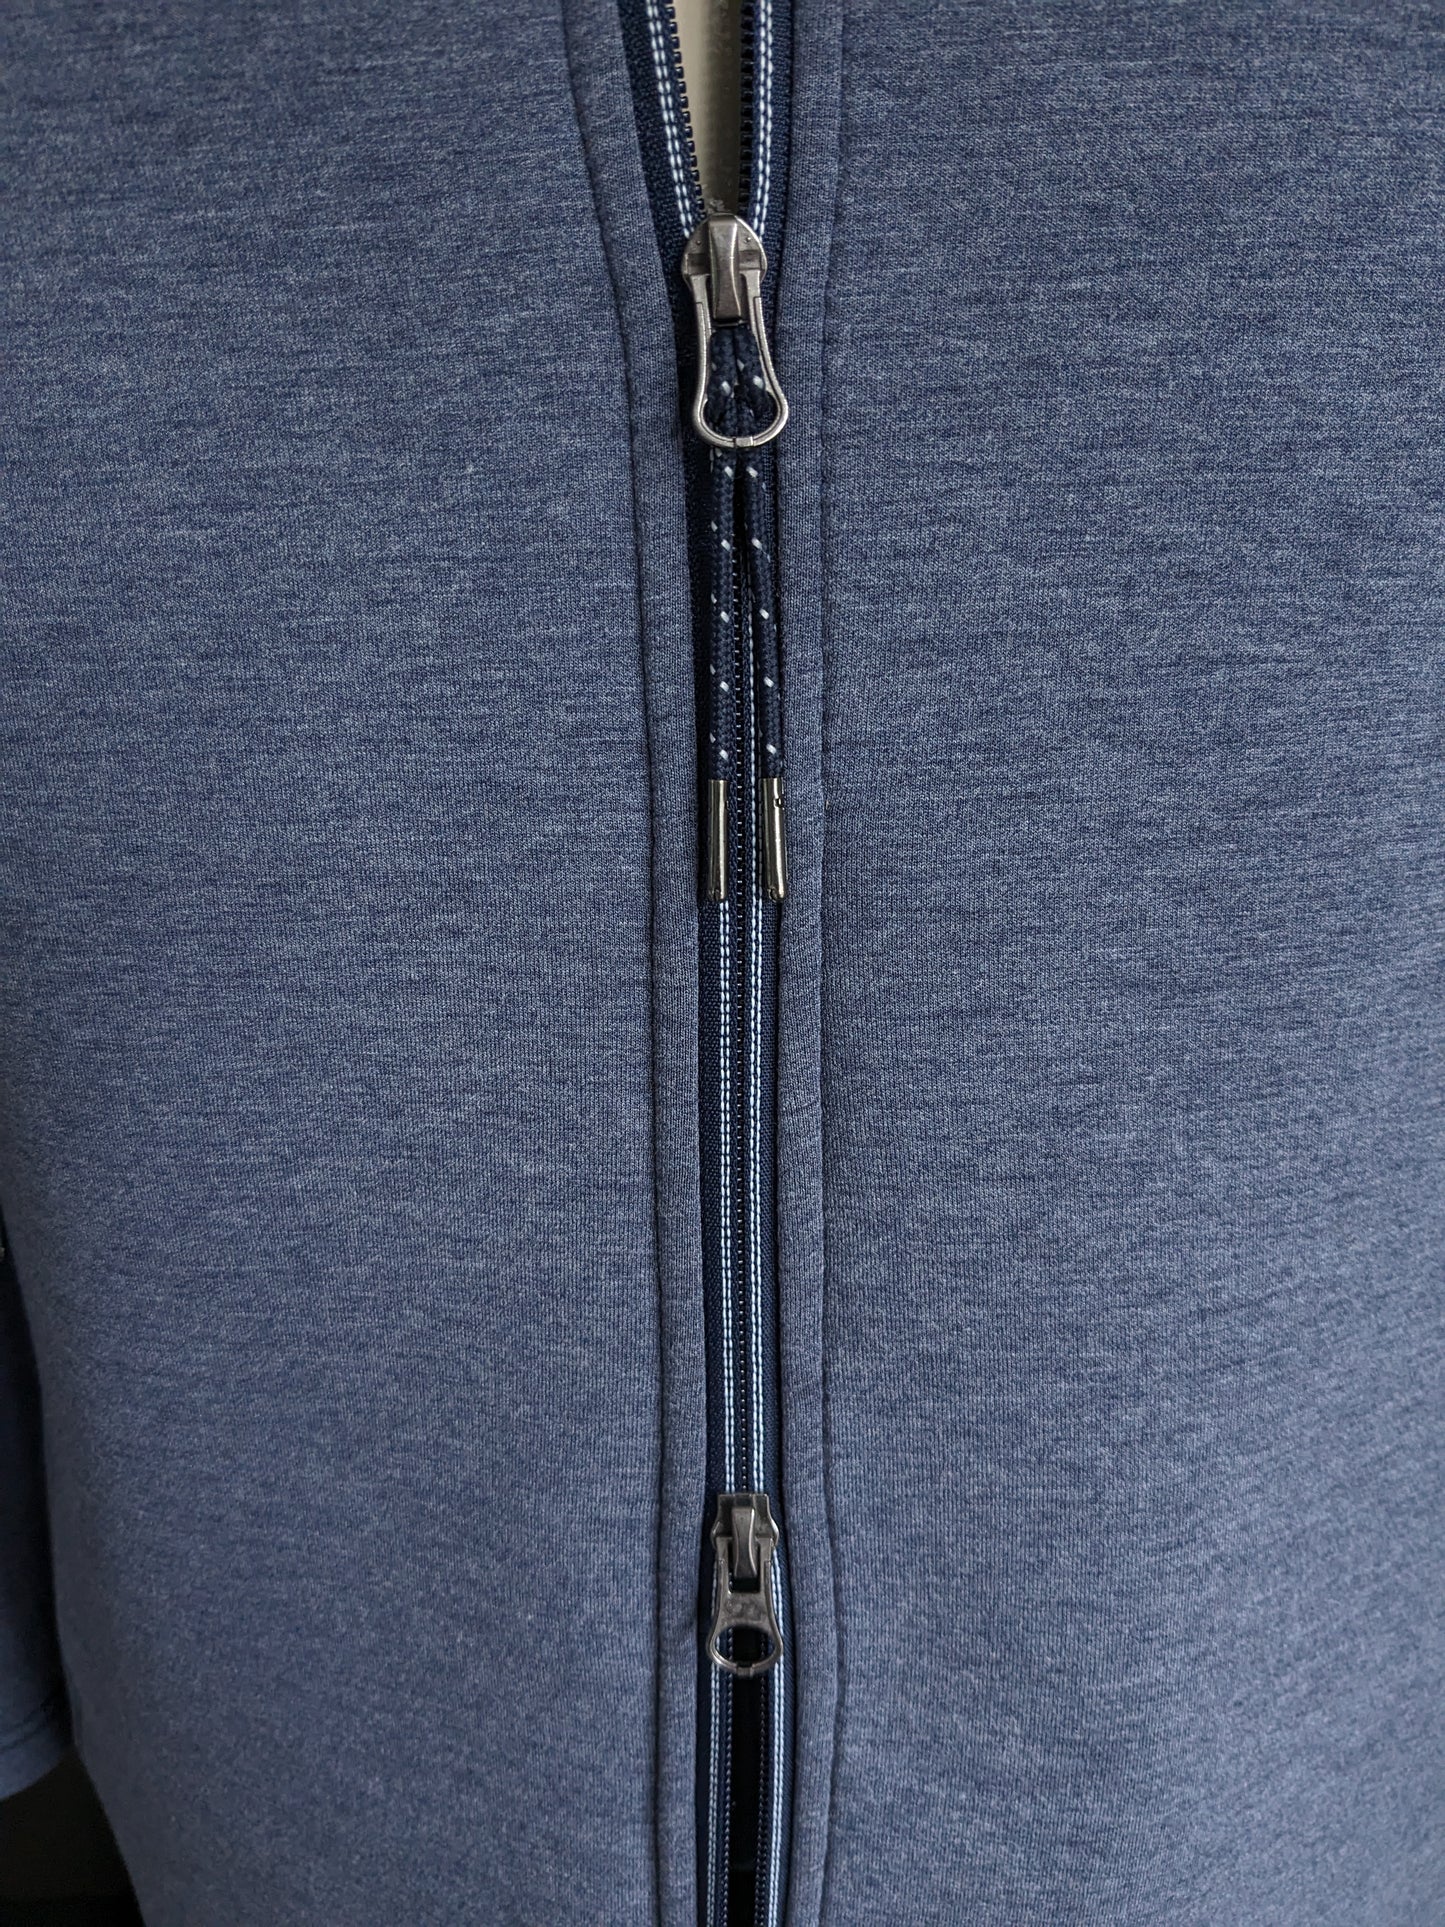 Kjelvik Half-length Vest. Grey melange. Size L.